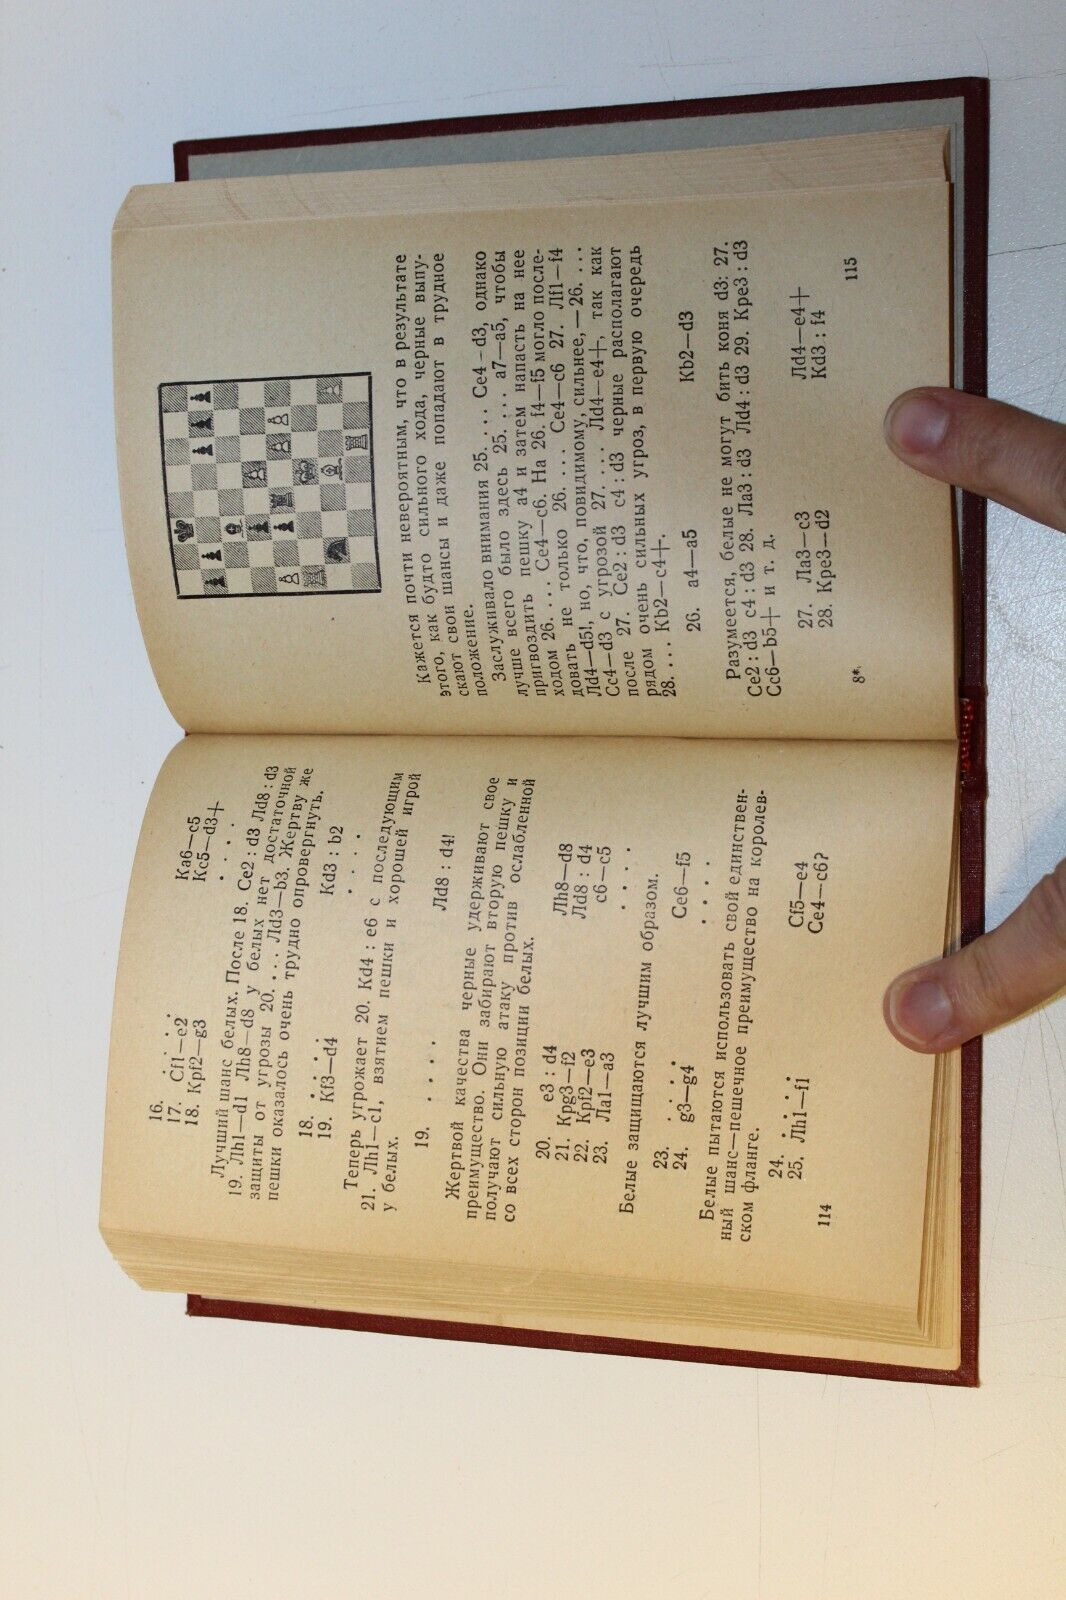 11528.Russian chess book: Levenfish 1936. Alekhine-Euwe world championship